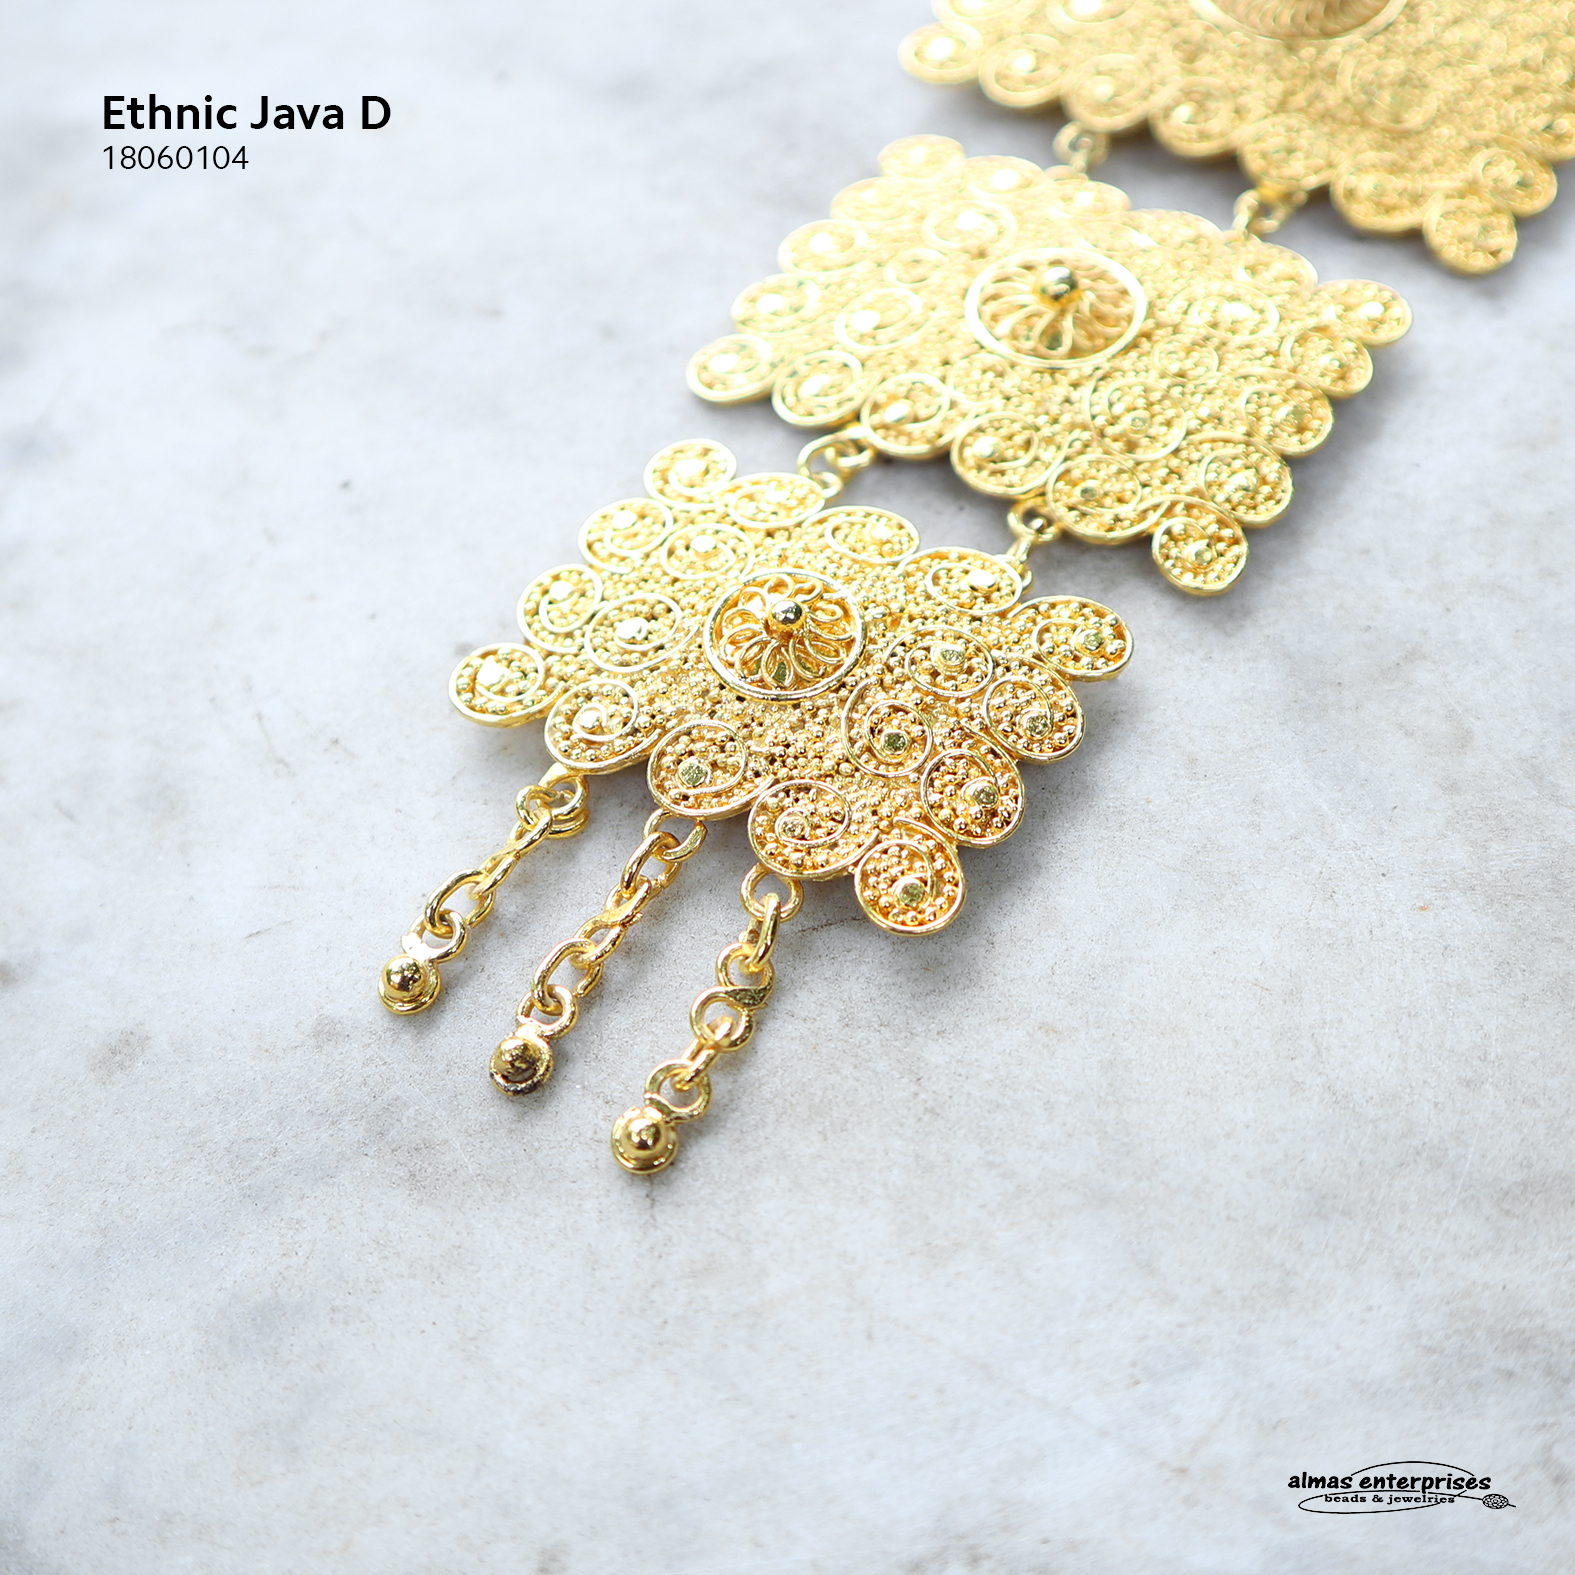 Ethnic Java D